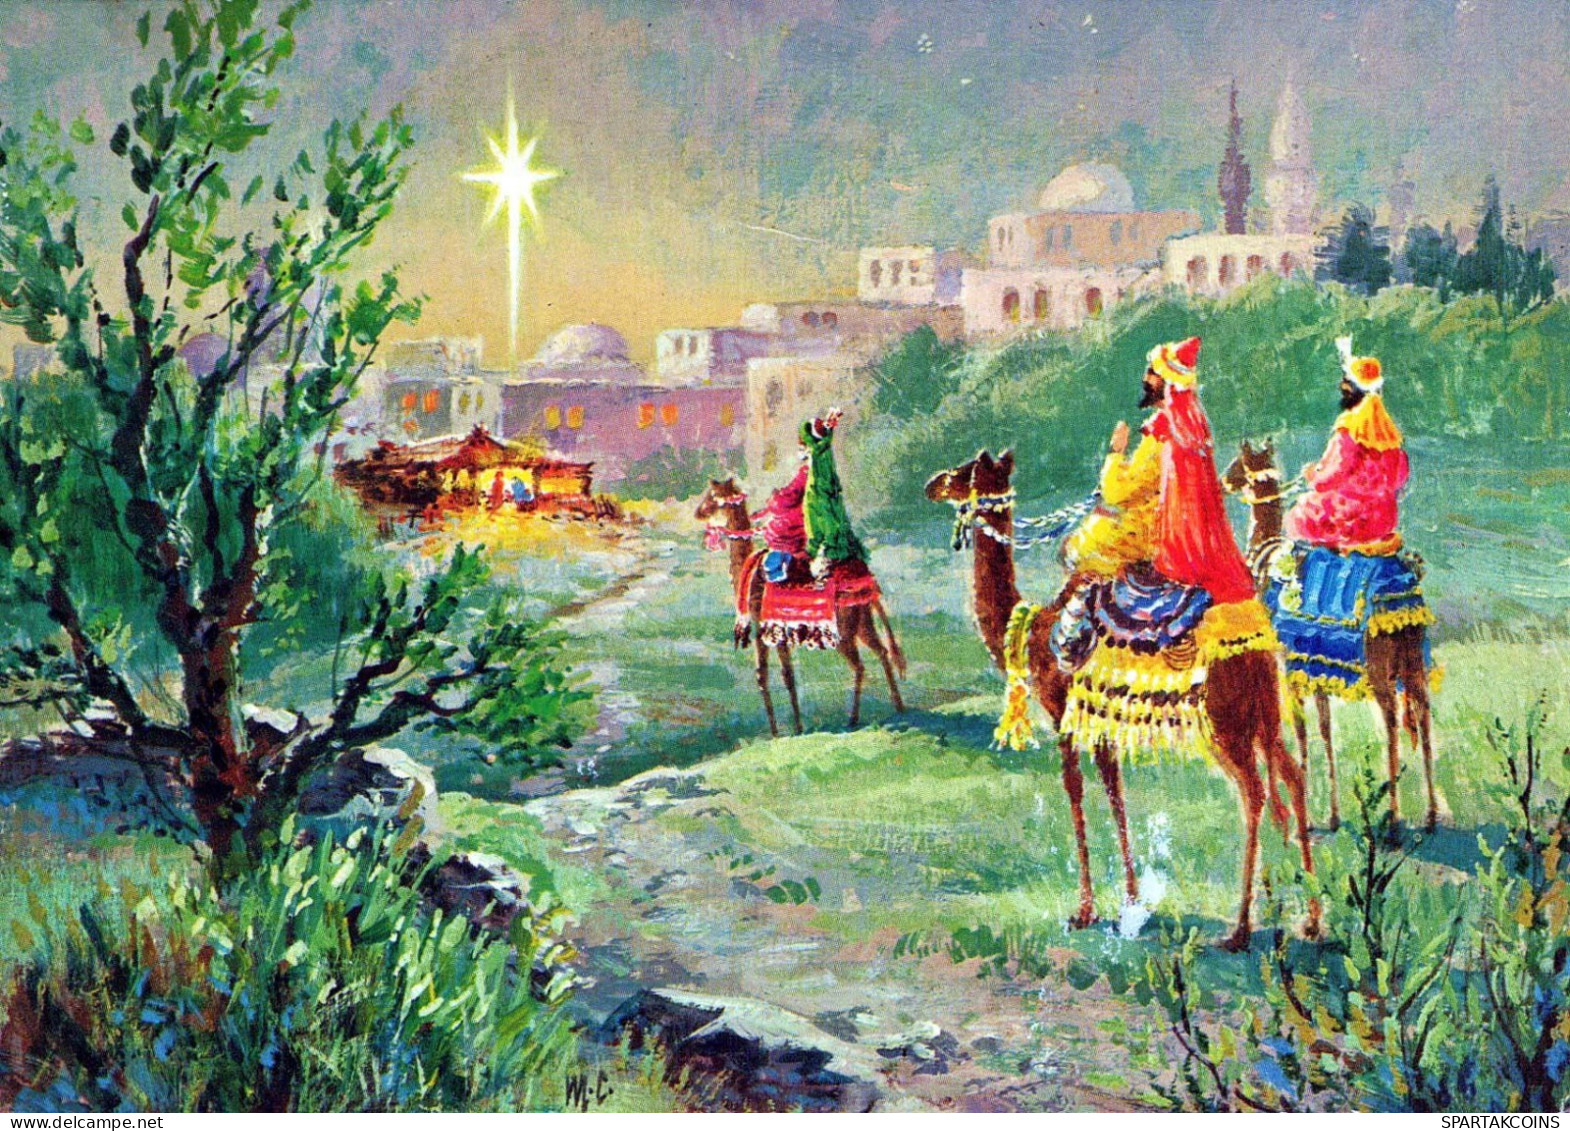 SAINTS Christmas Christianity Vintage Postcard CPSM #PBB957.A - Saints